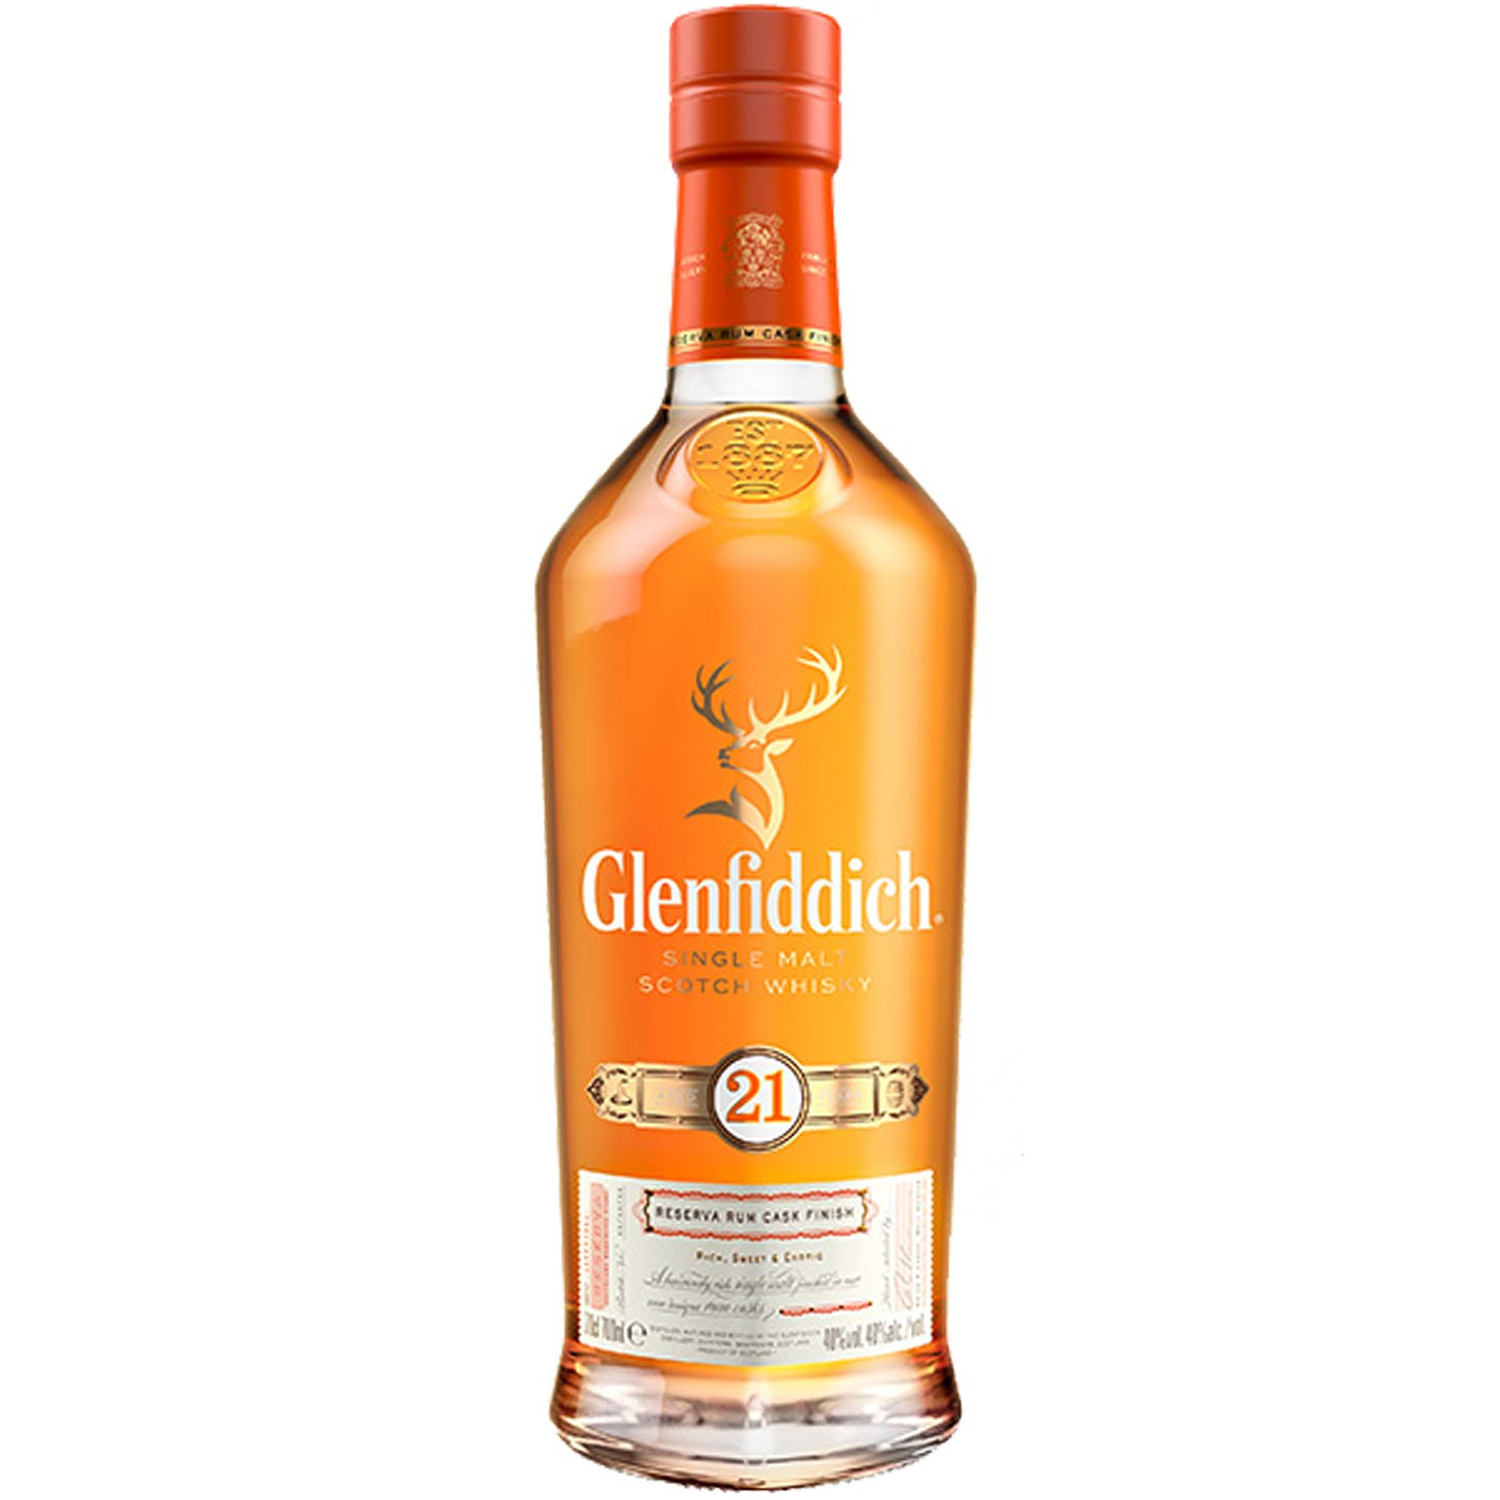 Glenfiddich Speyside Single Malt Scotch Whisky 21 year old